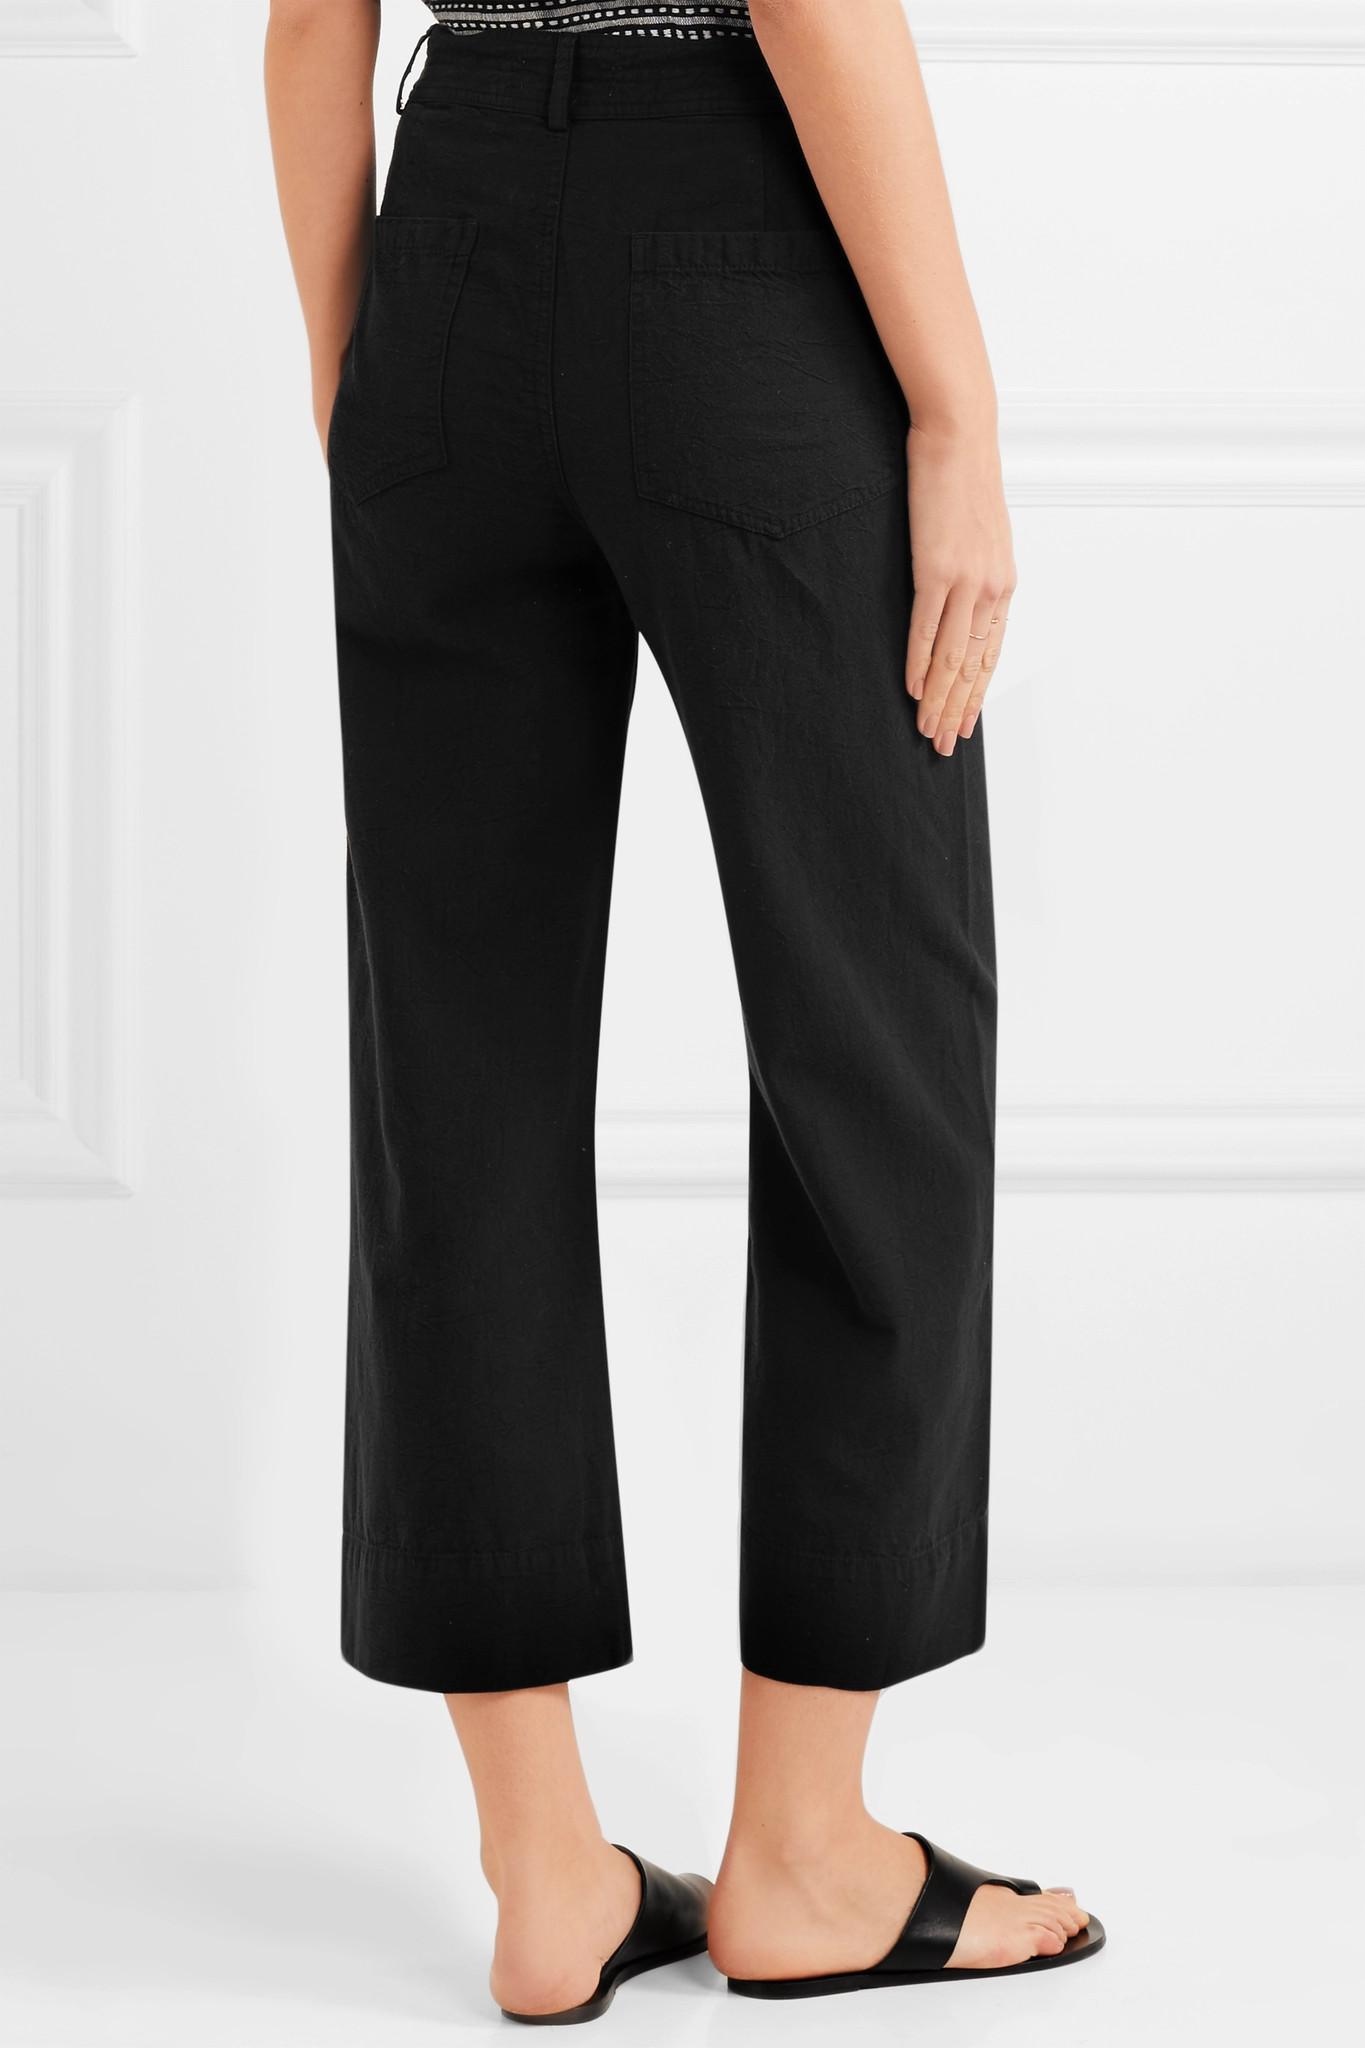 Lyst - Apiece Apart Woman Cropped Cotton Wide-leg Pants Black in Black